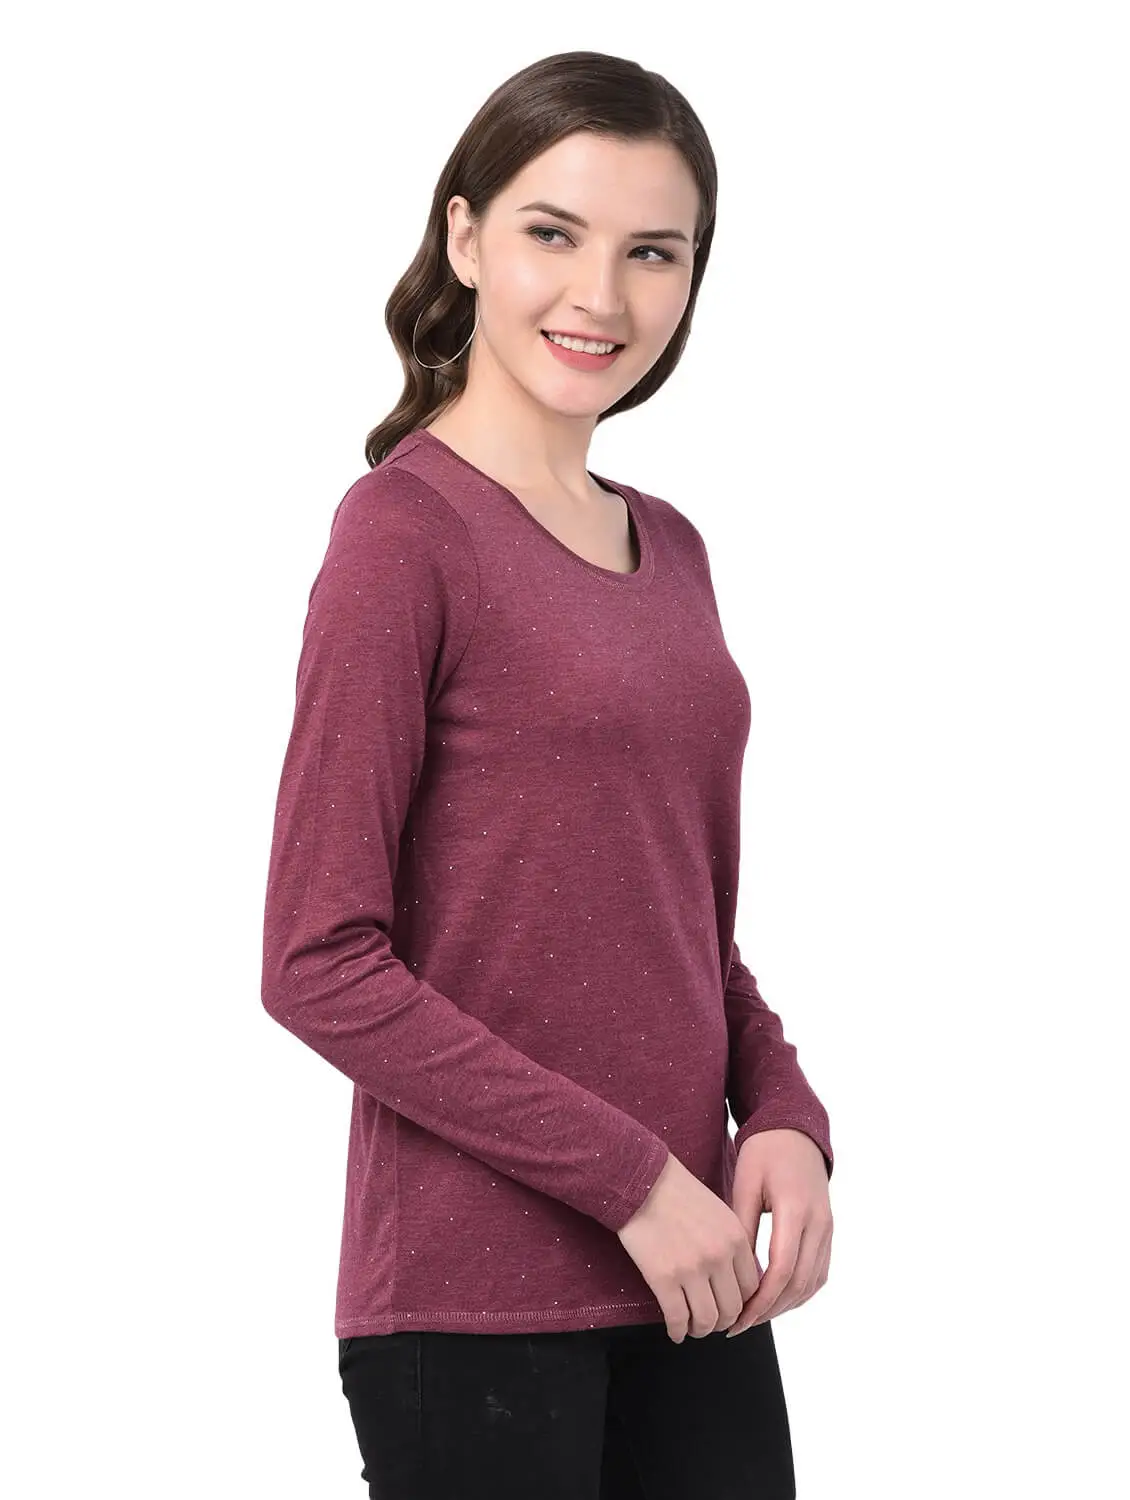 Wardrobe Staple: Women's Cotton T-Shirt